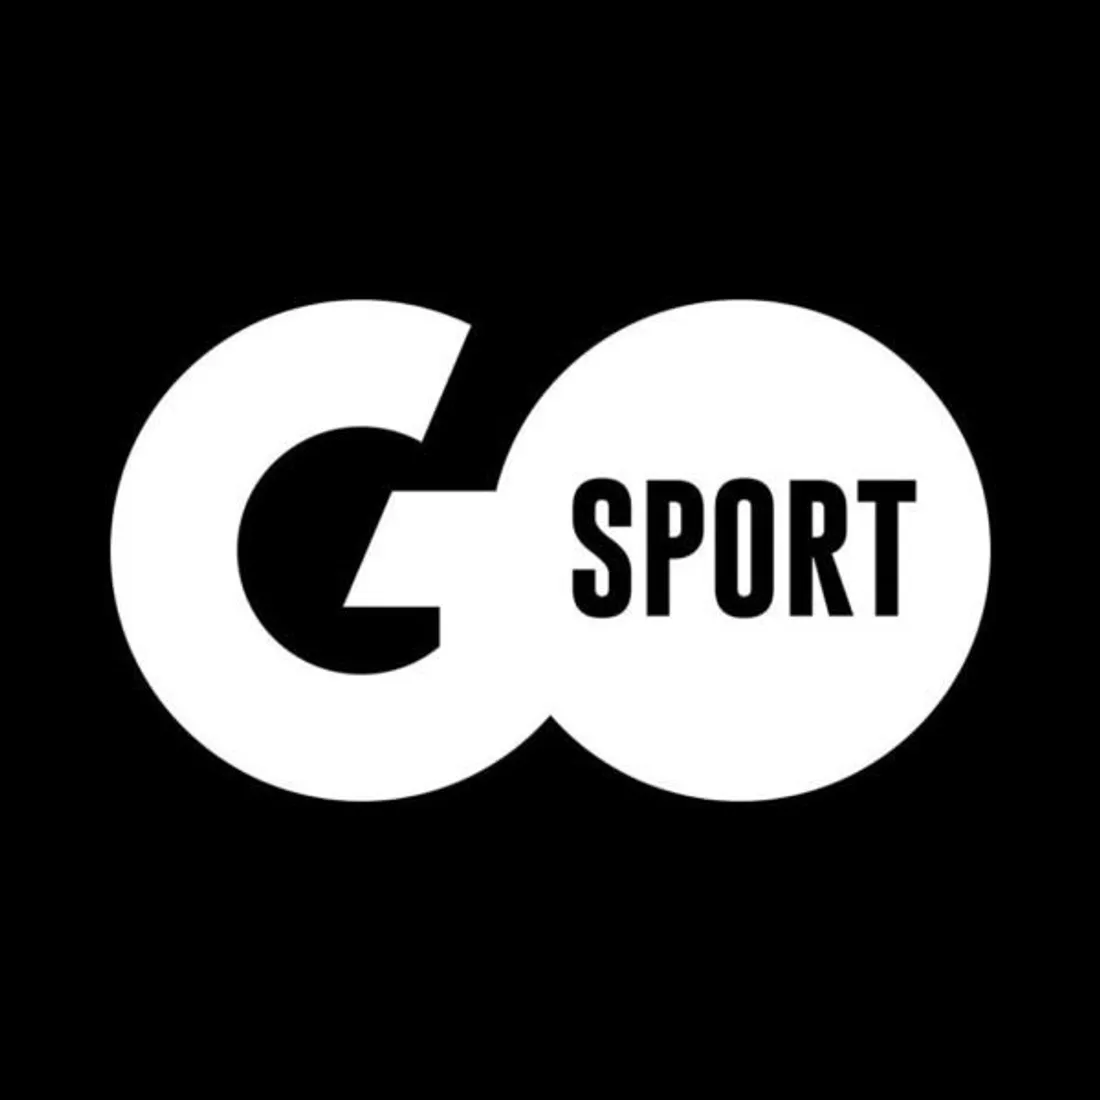 Go Sport compte 2160 salariés en France